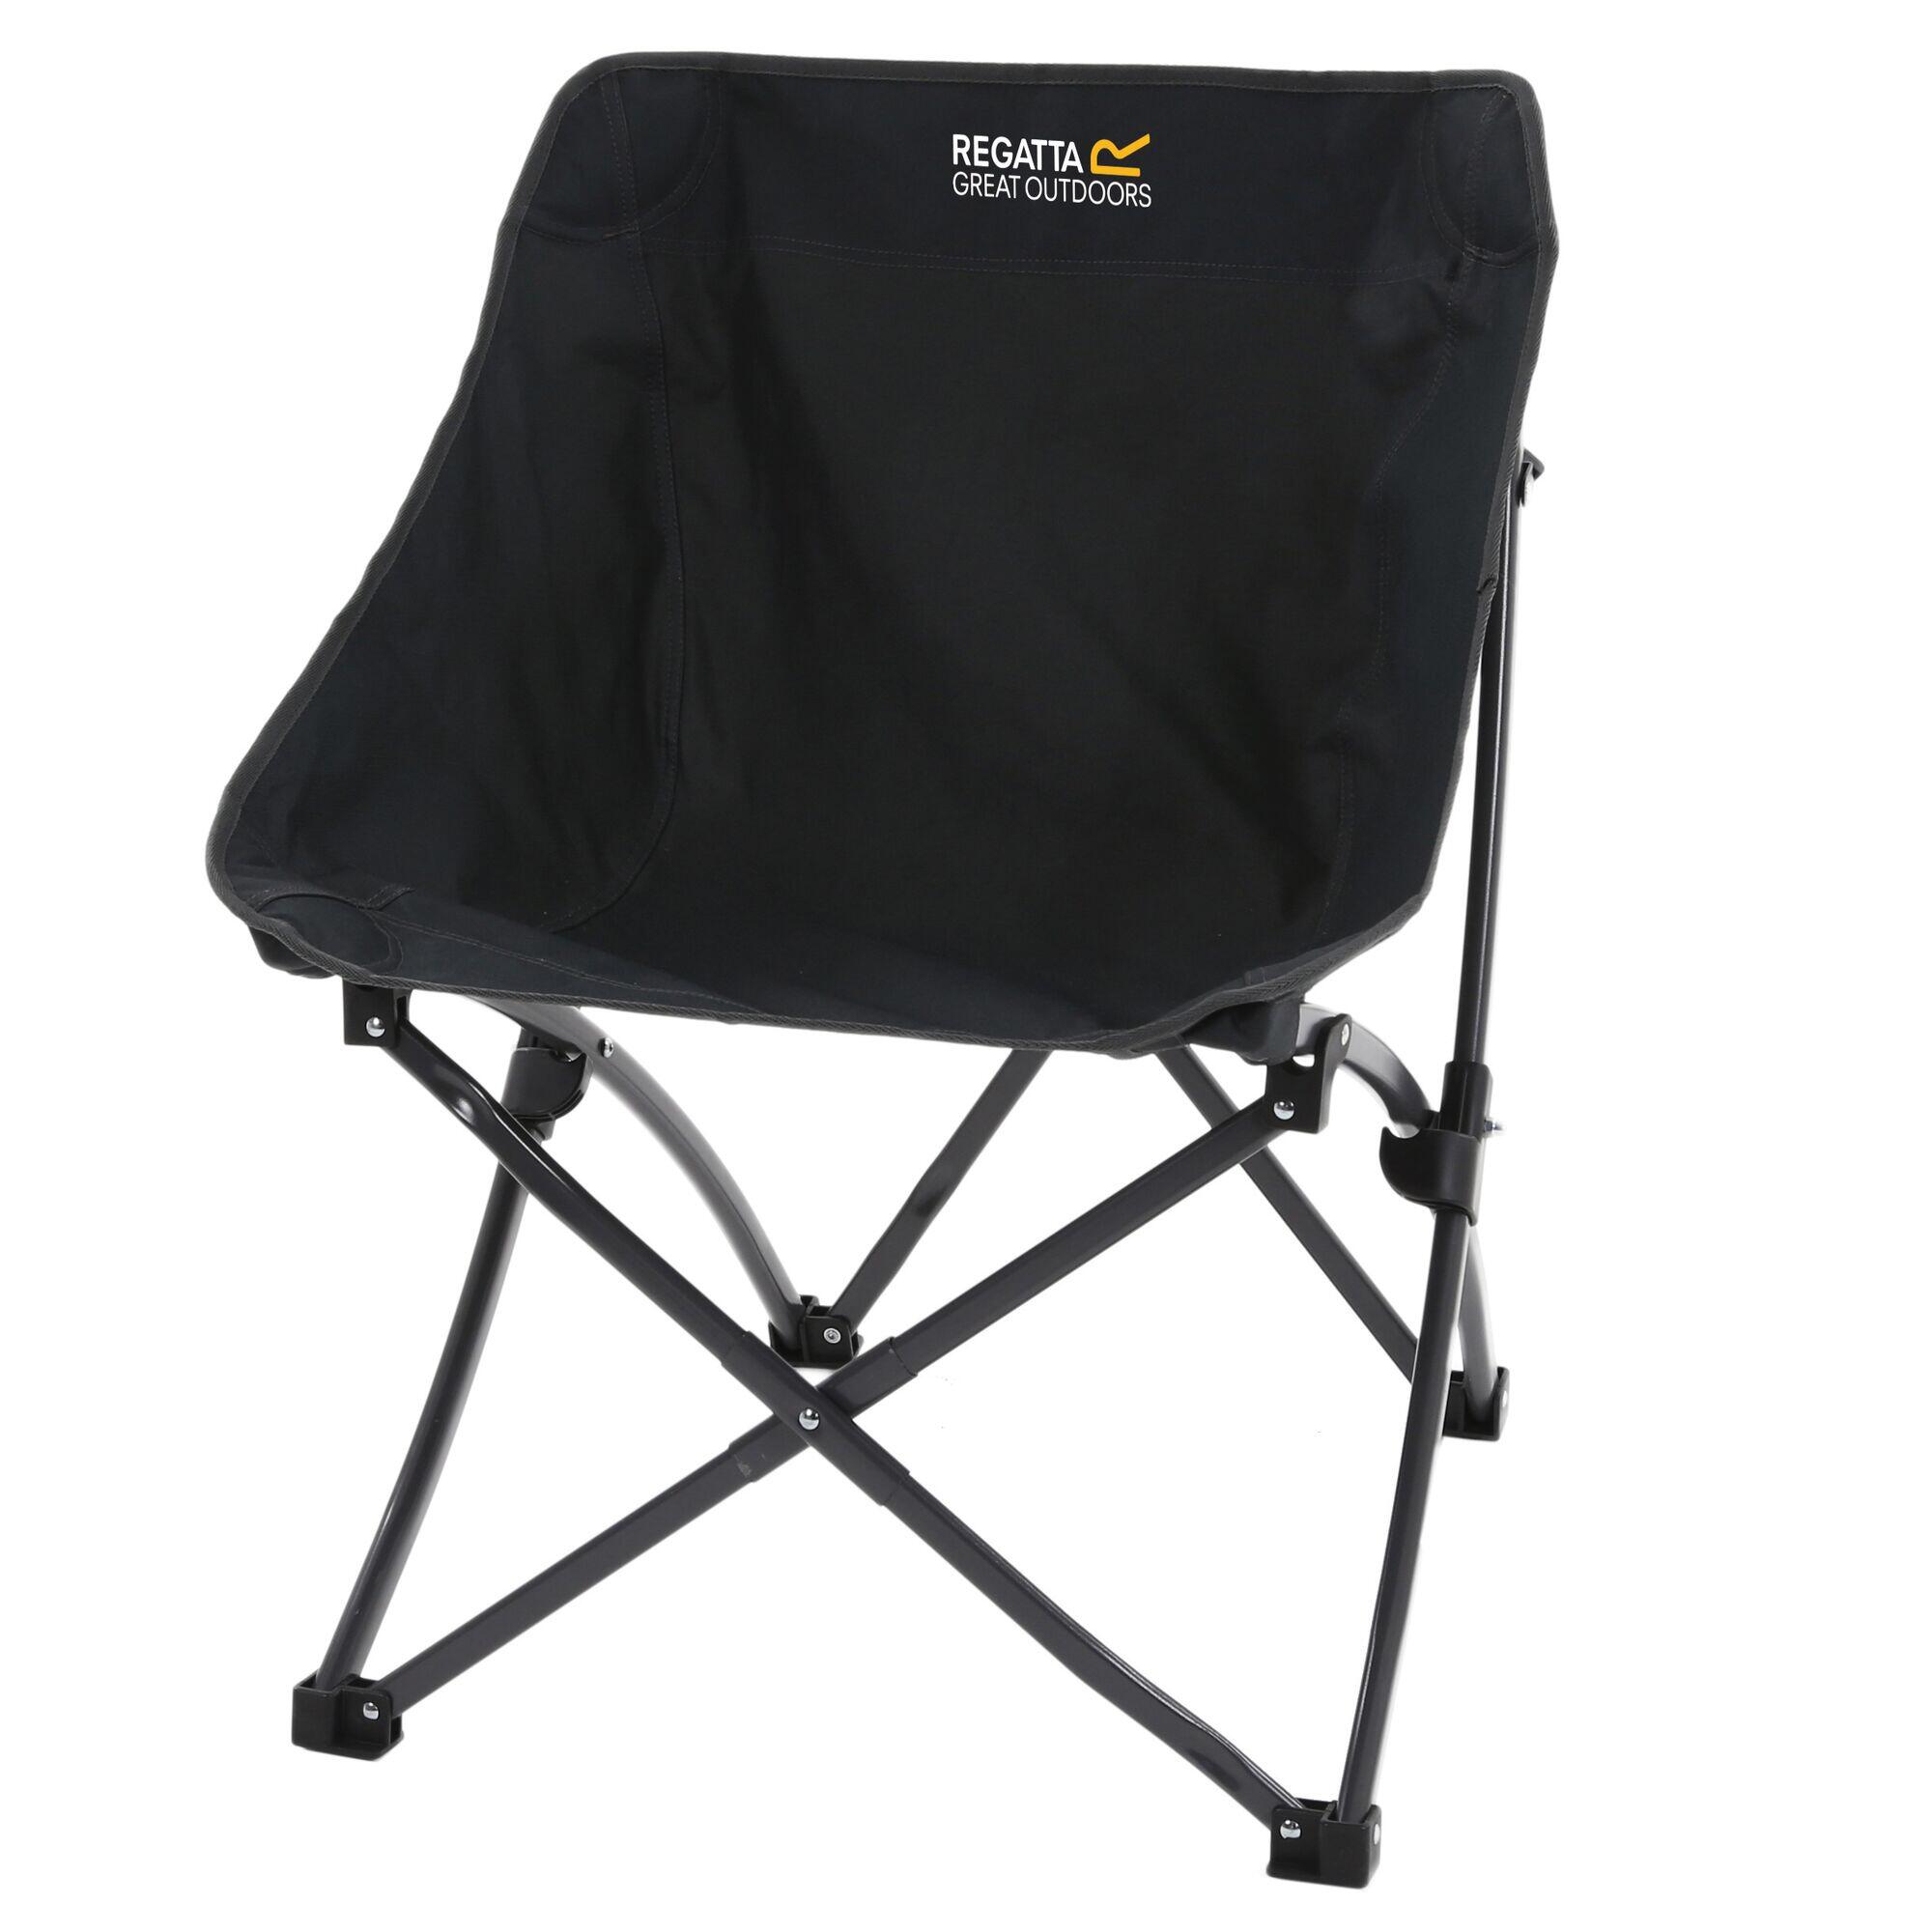 REGATTA Forza Pro Adults' Camping Chair - Black